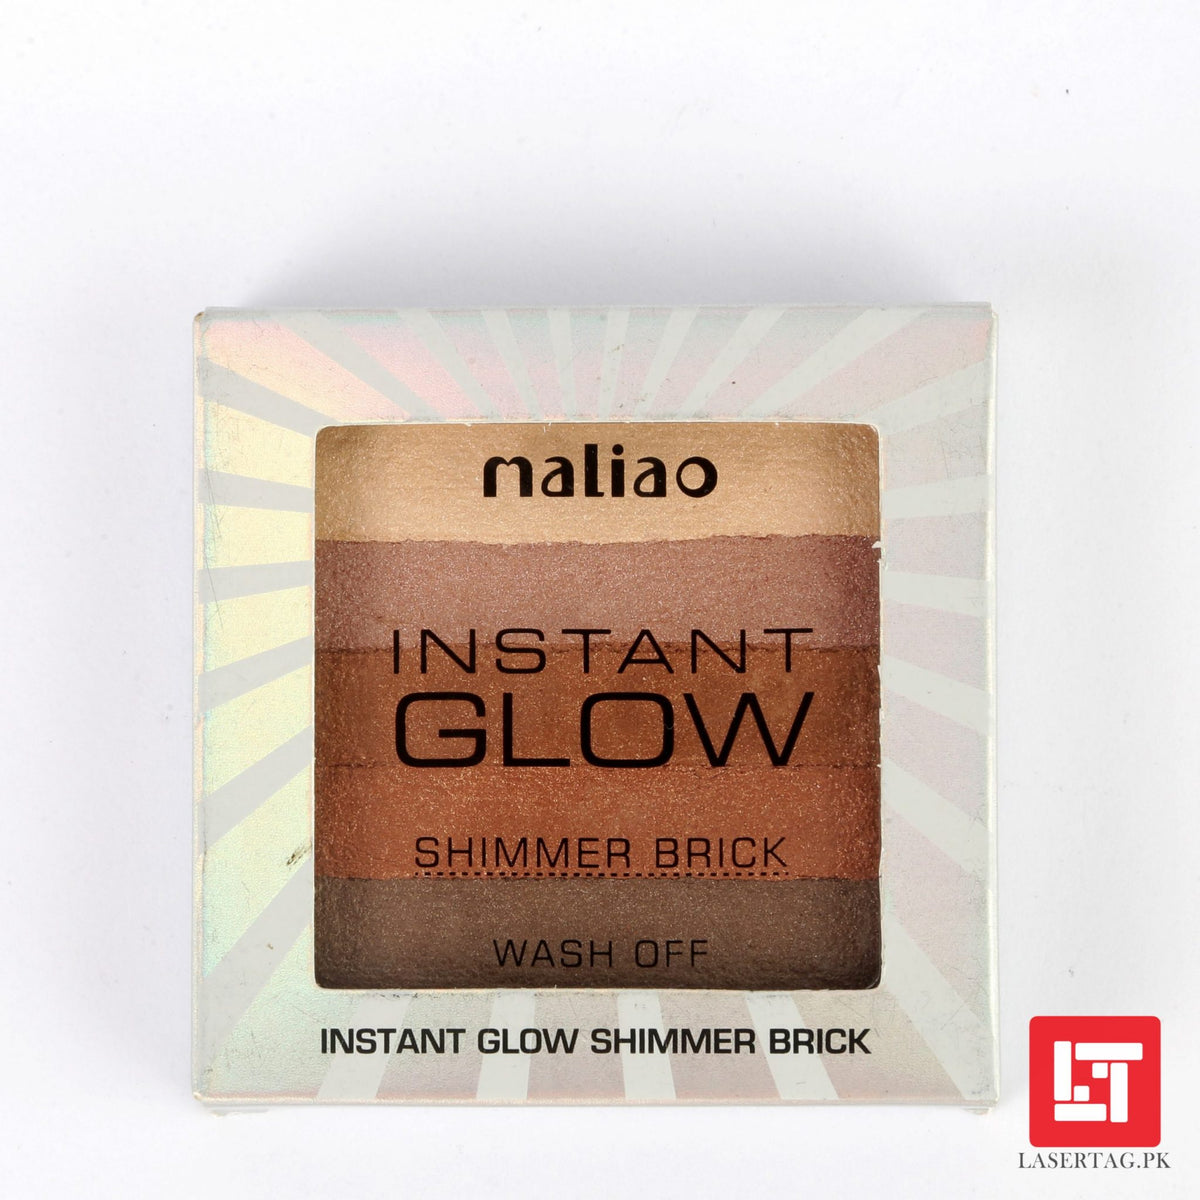 Maliao Instant Glow Shimmer Brick Wash Off Shade M15-04 9g freeshipping - lasertag.pk